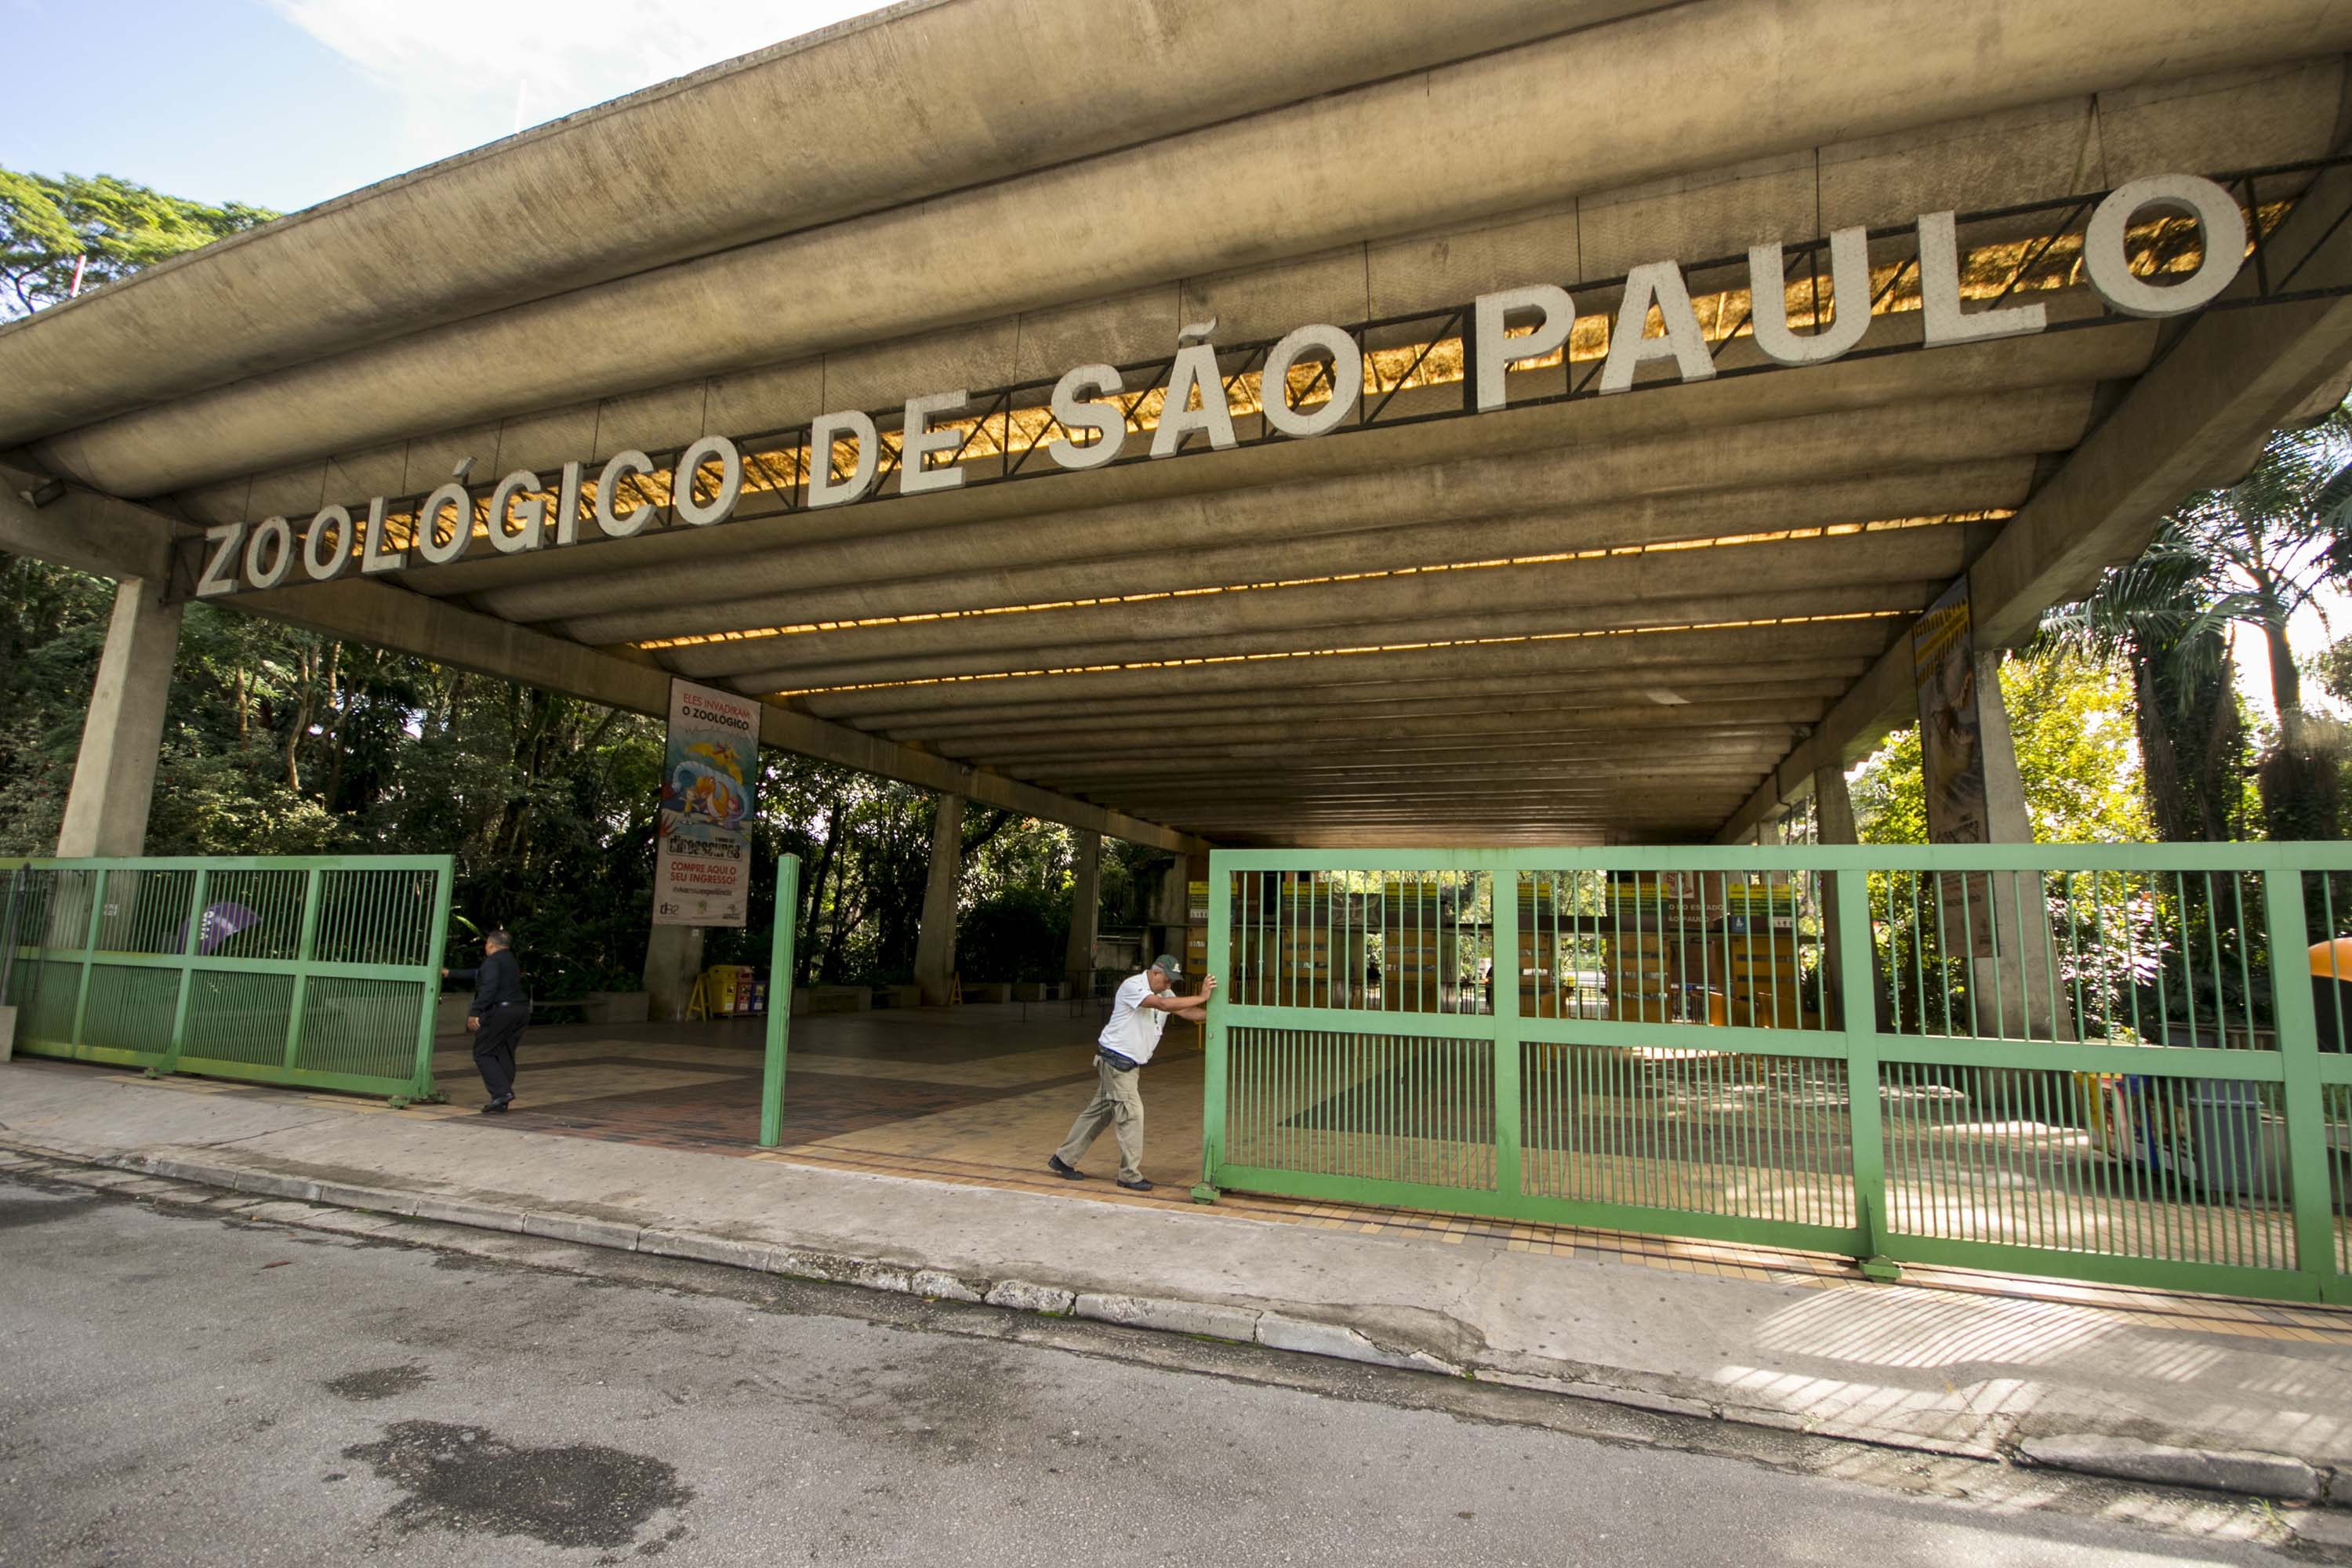 Após 51 dias fechado, Zoológico de São Paulo é reaberto | VEJA SÃO PAULO